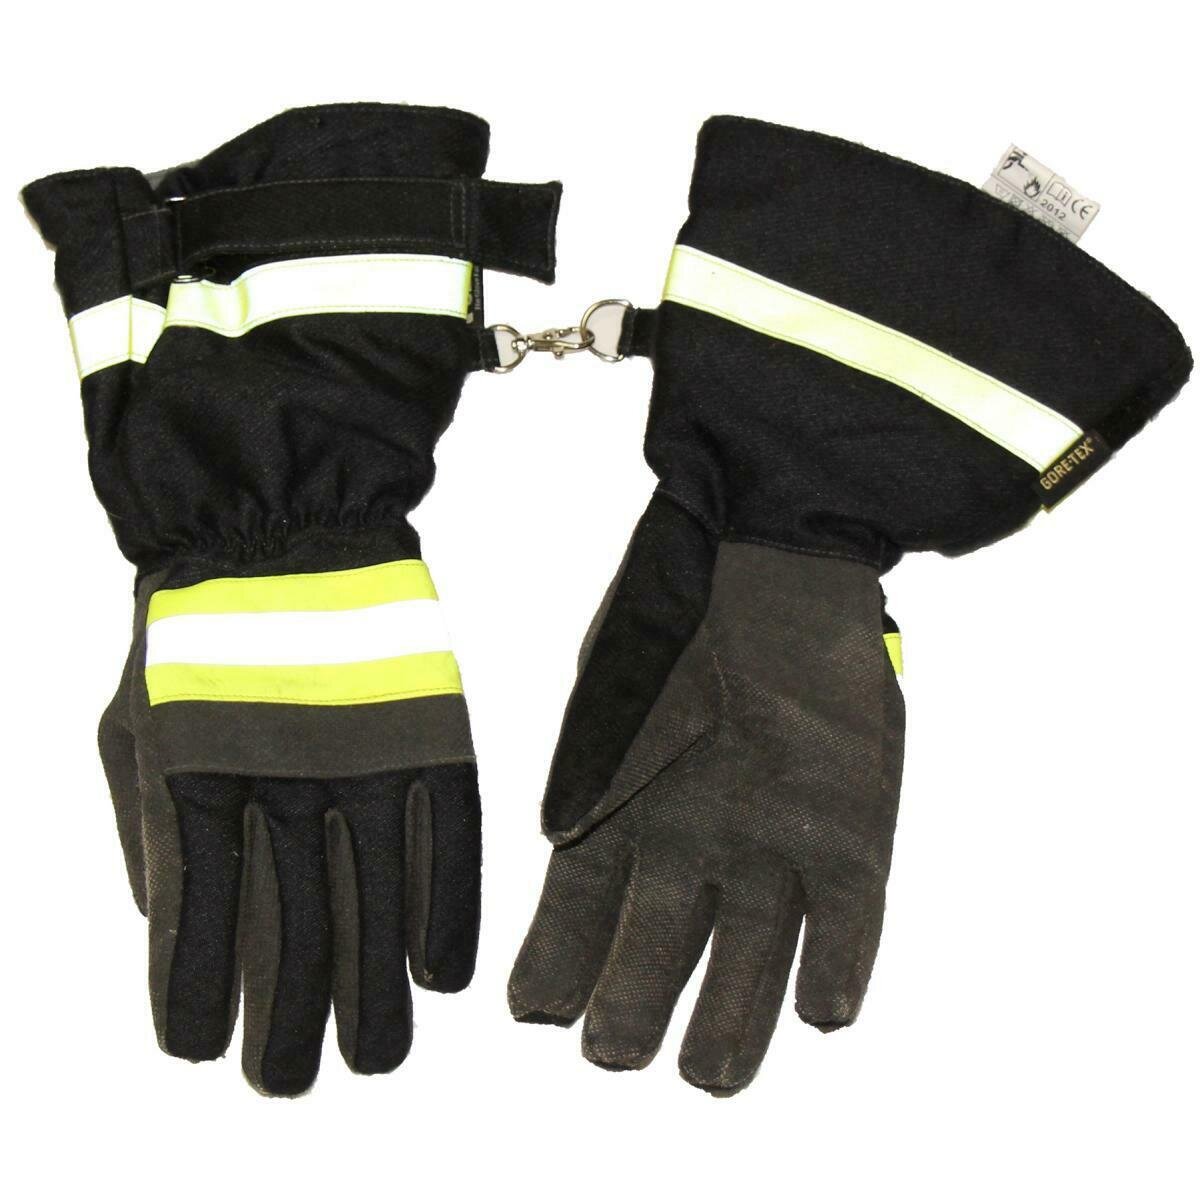 Handschuhe THL Gr FW Feuerwehrhandschuhe Feuerwehr Feuerwehrhandschuh SEG 10 